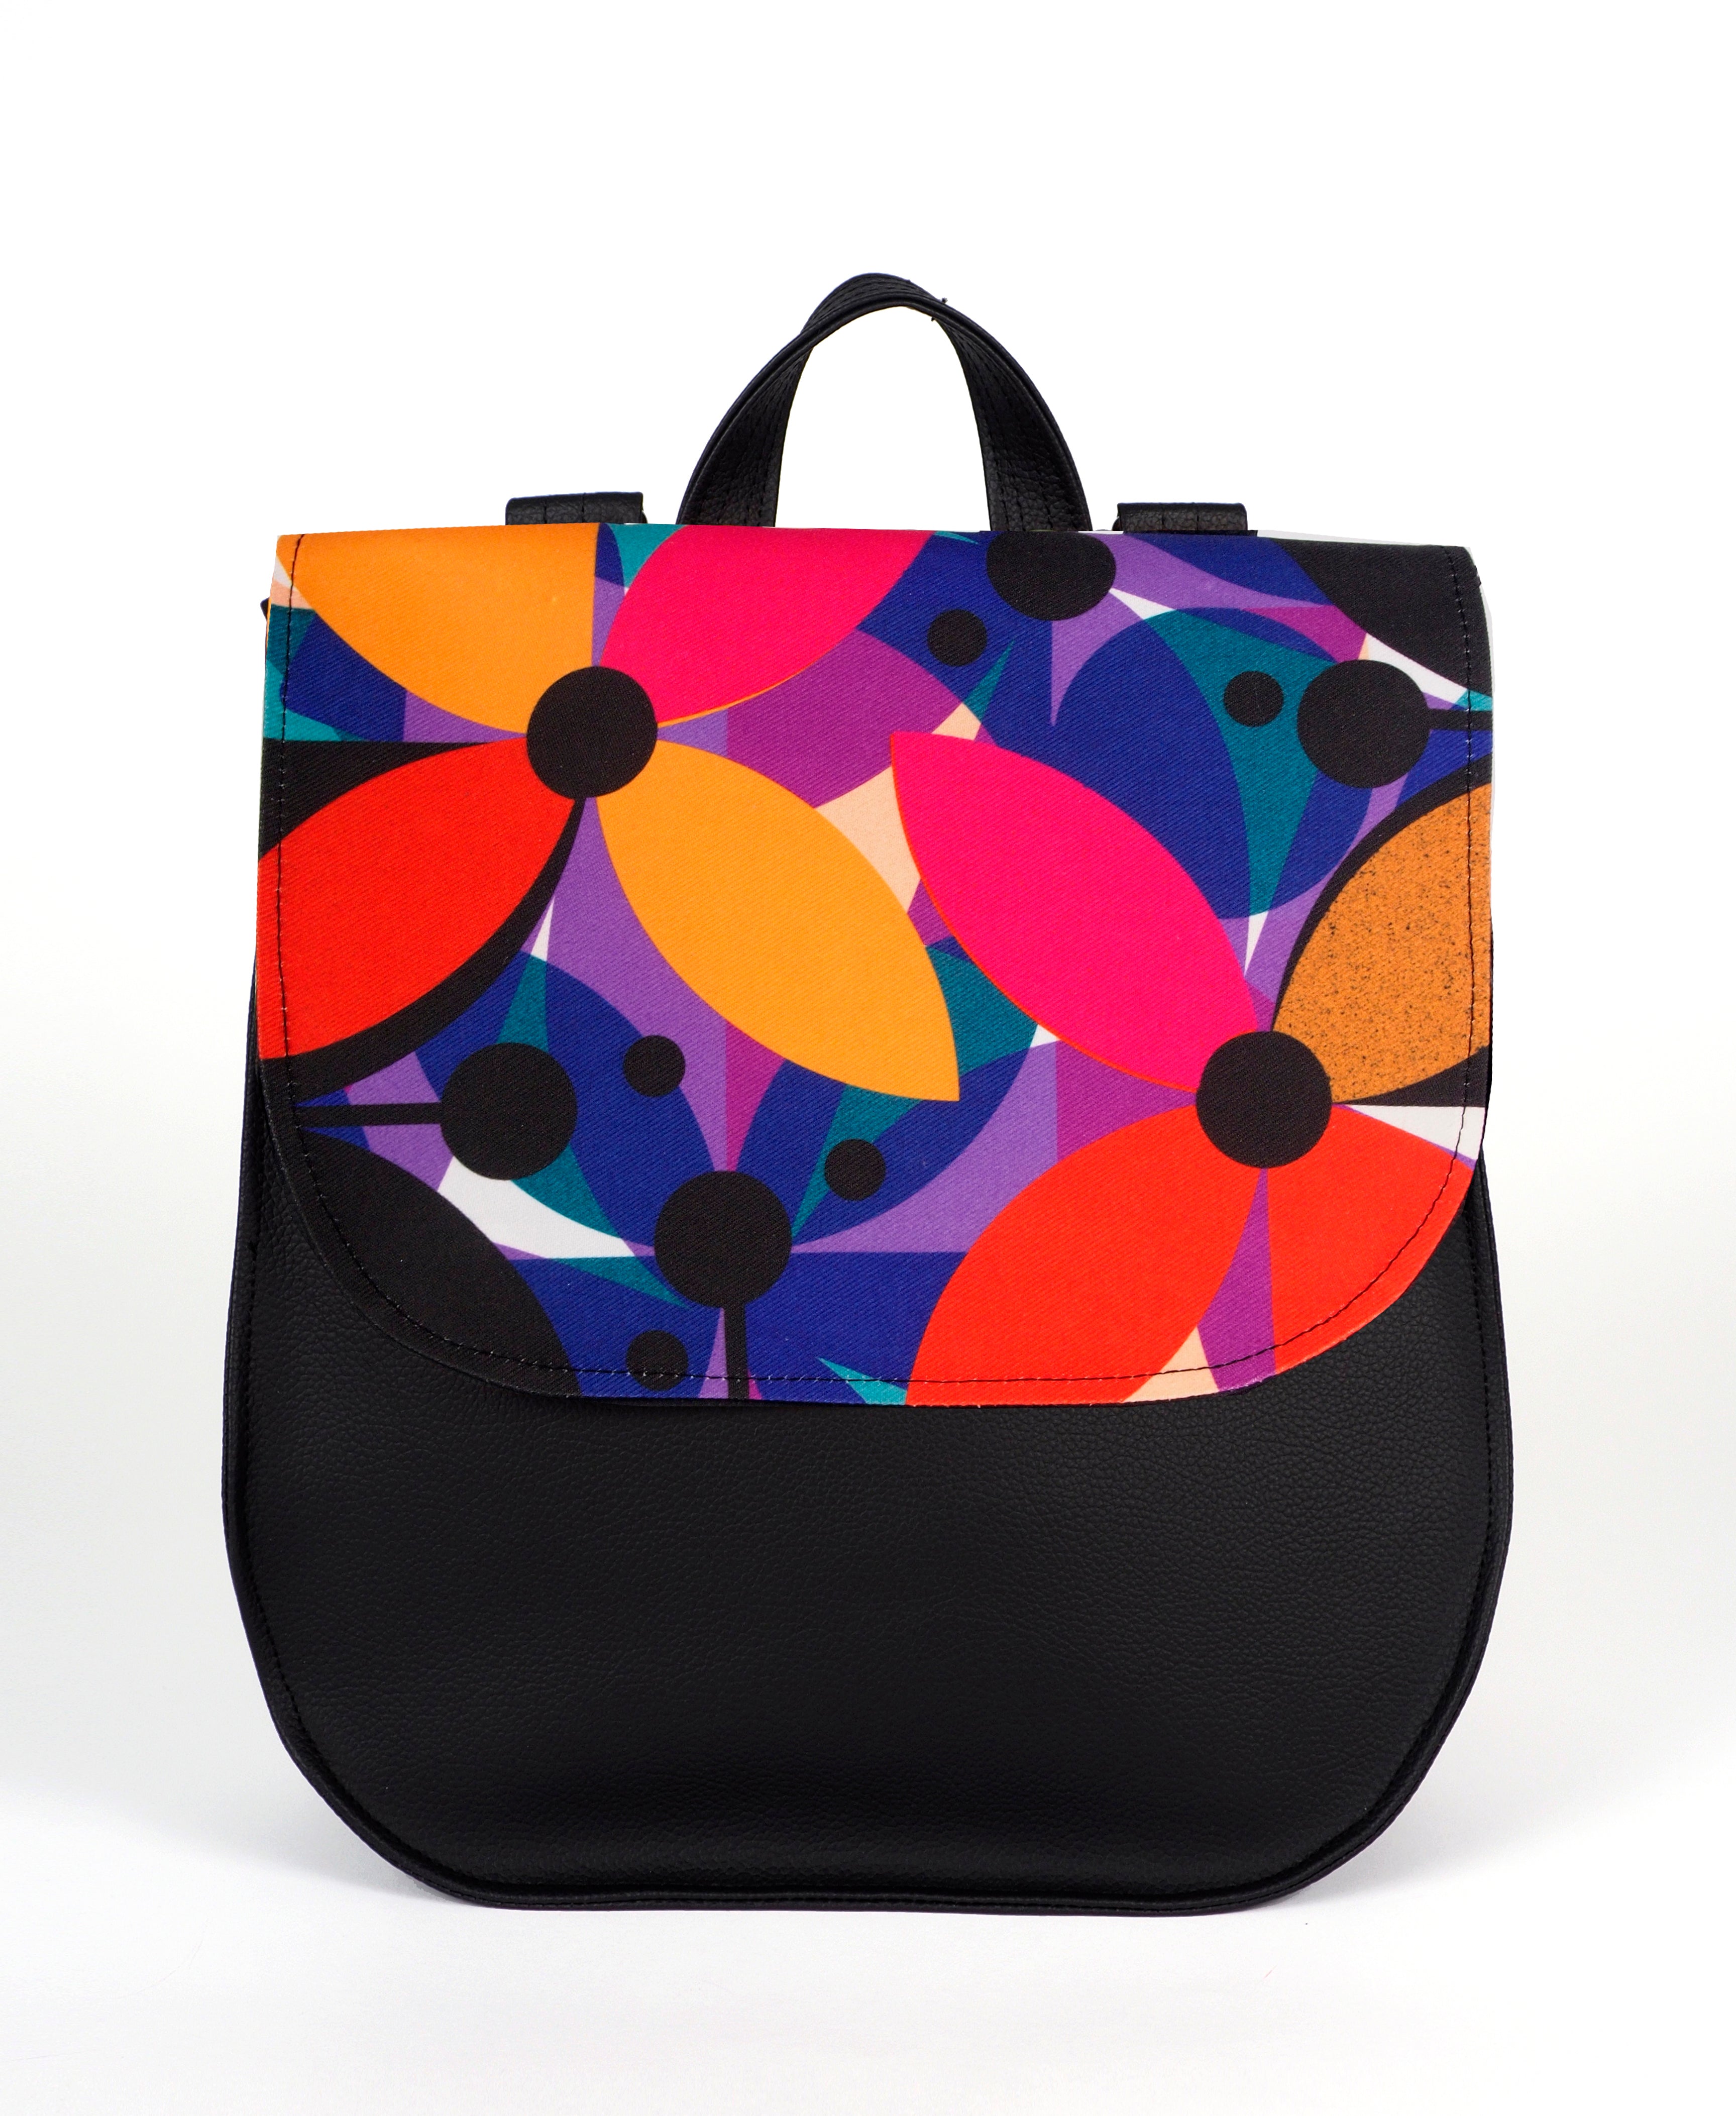 Bardo backpack&bag - Colorful Fiestа - Premium bardo backpack&bag from BARDO ART WORKS - Just lvart bag, backpack, bag, black, floral, flowers, gift, green, handemade, messenger, nature, red, urban style, vegan leather, woman85.00! Shop now at BARDO ART WORKS